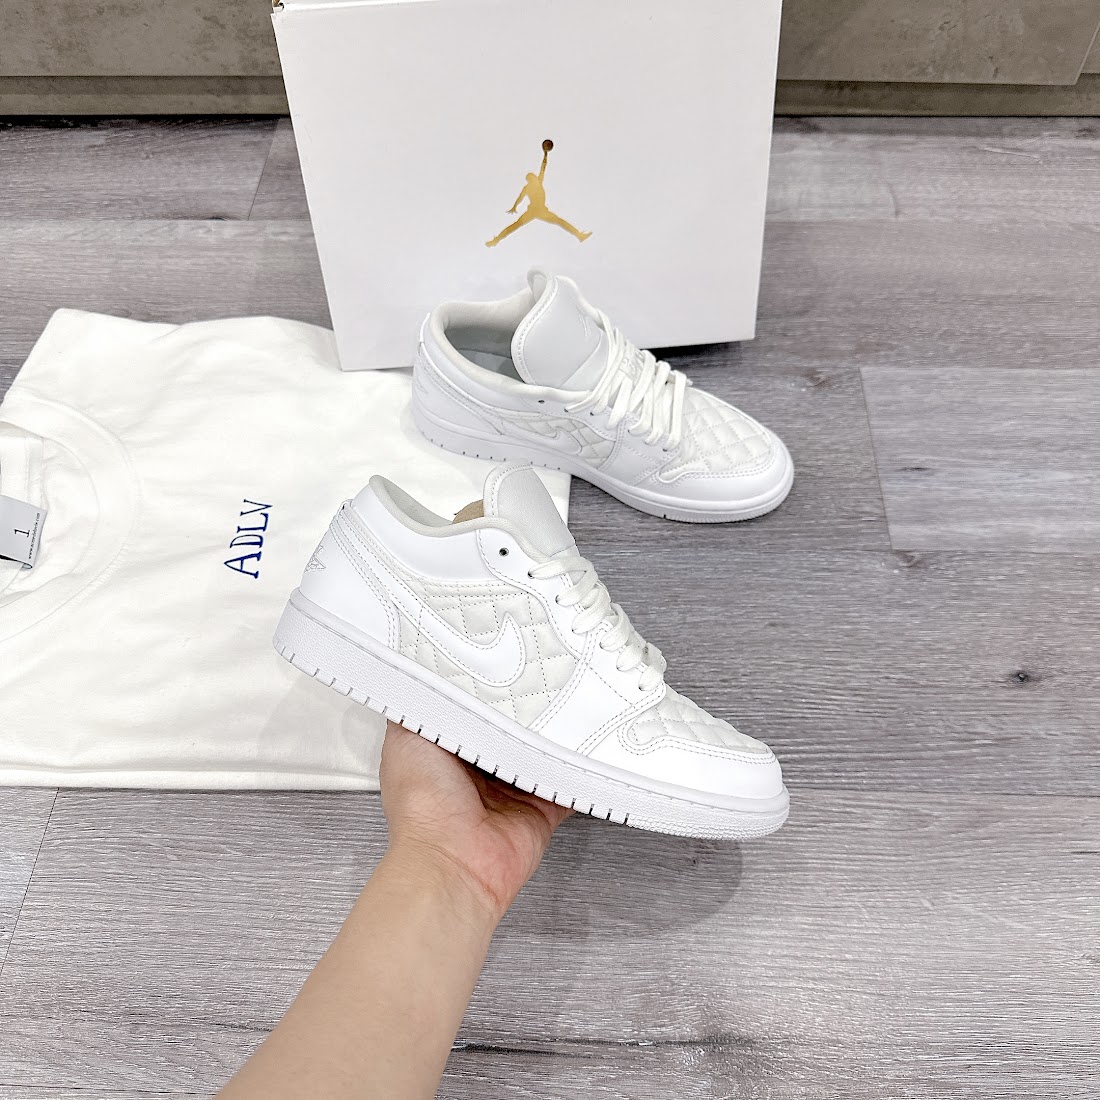 1800 đôi giày FAKE của Nike Air Jordan 1 x Dior Air Dior đã bị thu giữ  tại Mỹ